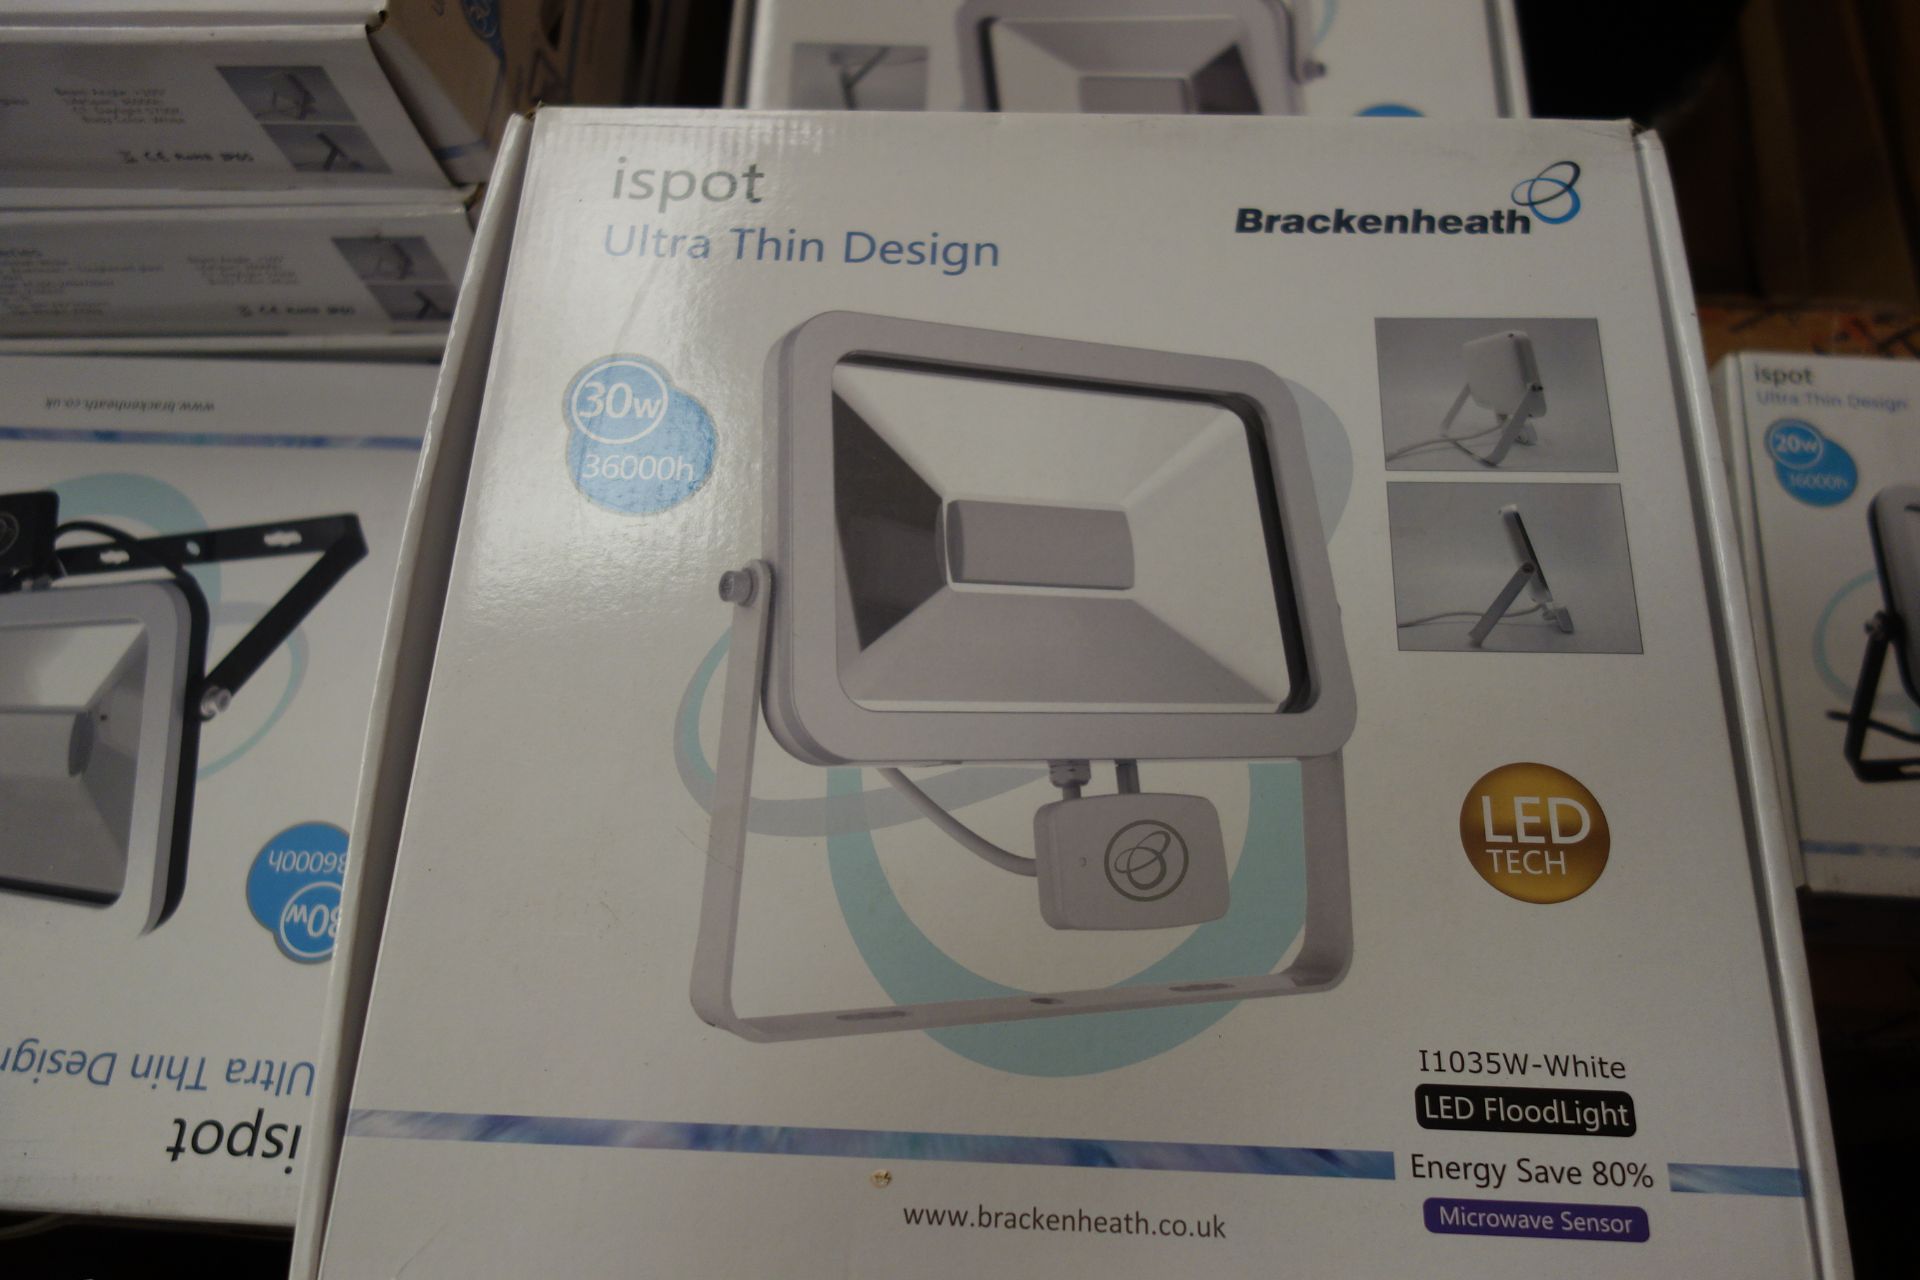 3 X BrakenHeath I1035W-White 30W Ispot Ultra Thin LED Floodlight With Microwave Sensor Energy Save